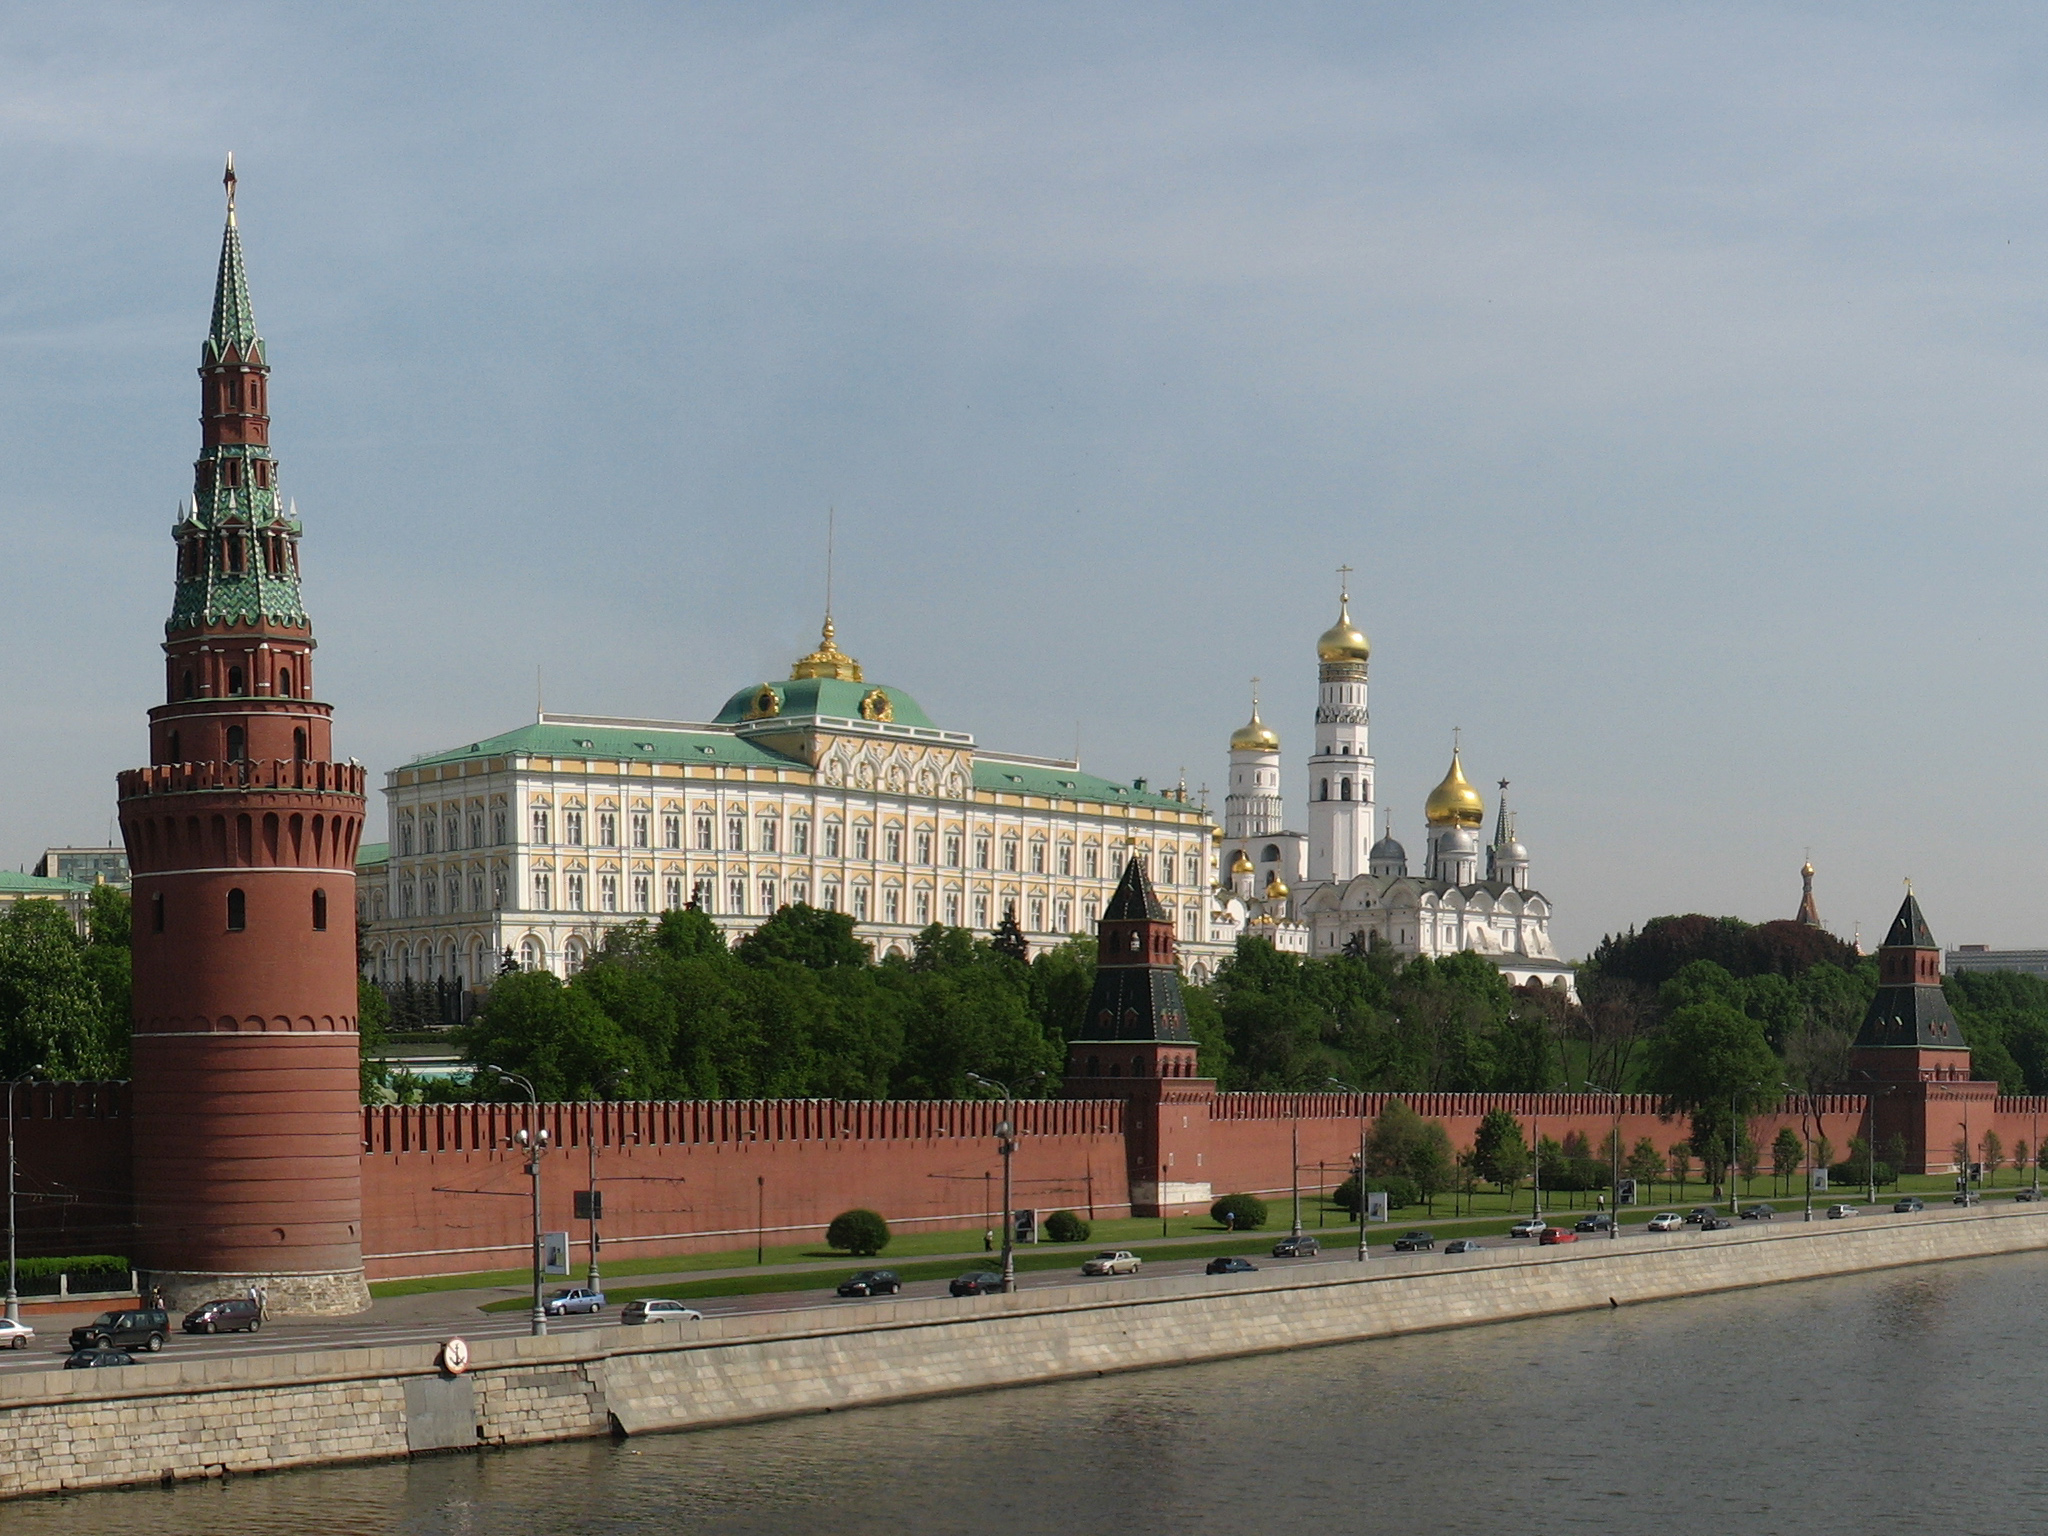 Moscow Kremlin Wall - Wikipedia